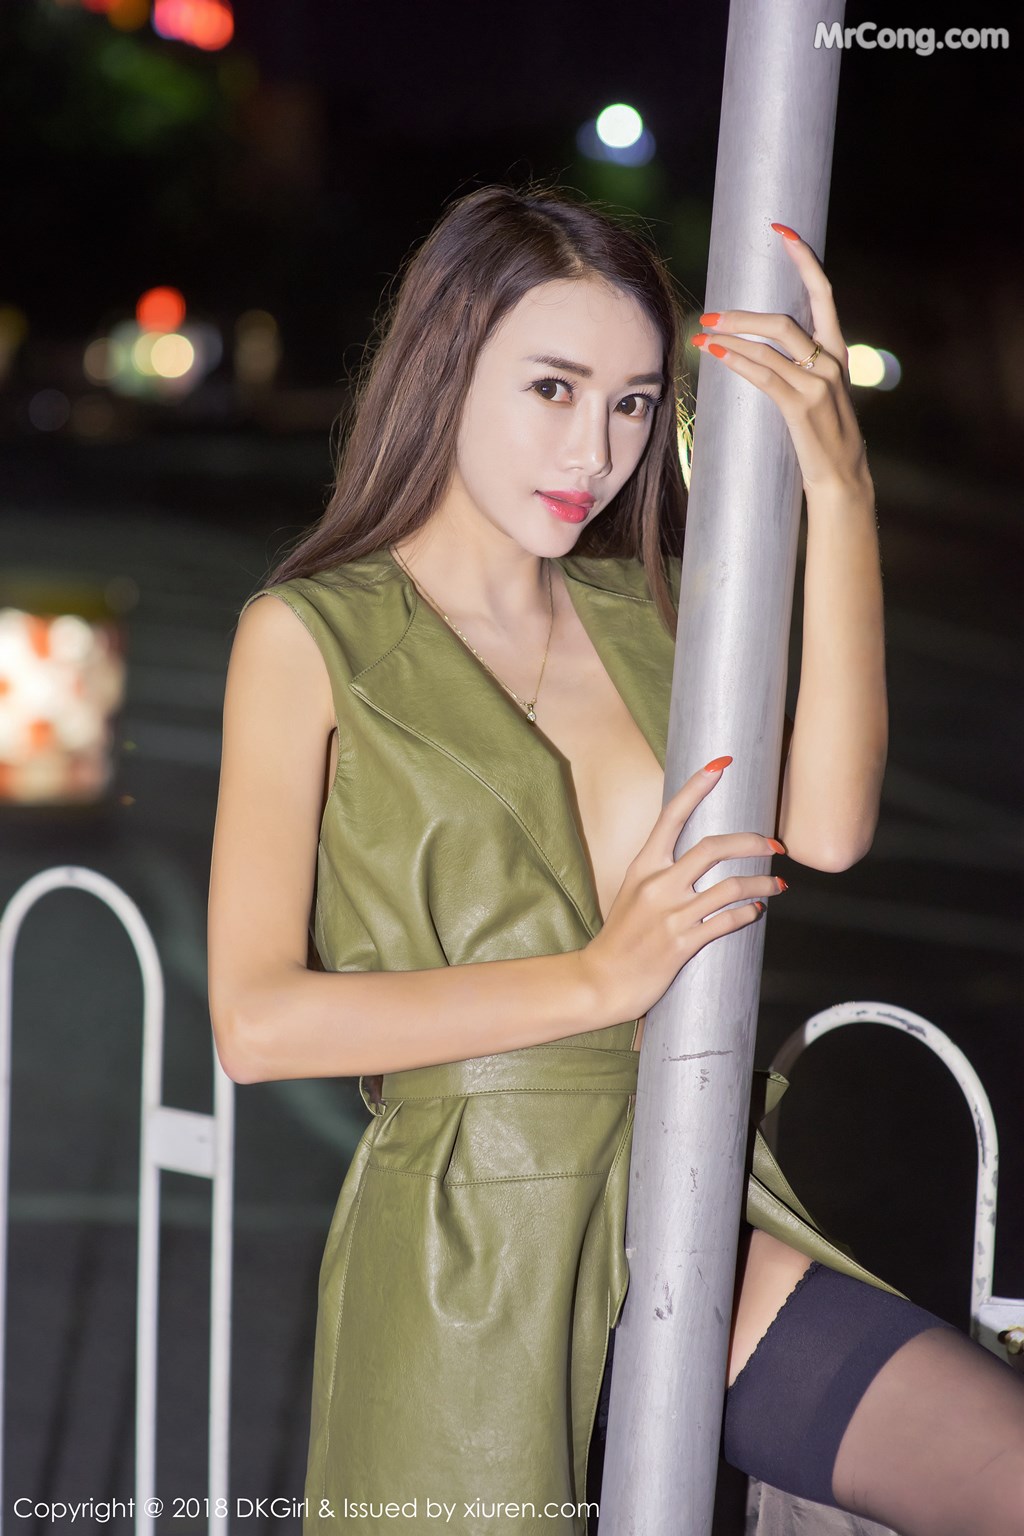 DKGirl Vol.059: Model Jessie (婕 西 儿) (50 photos)